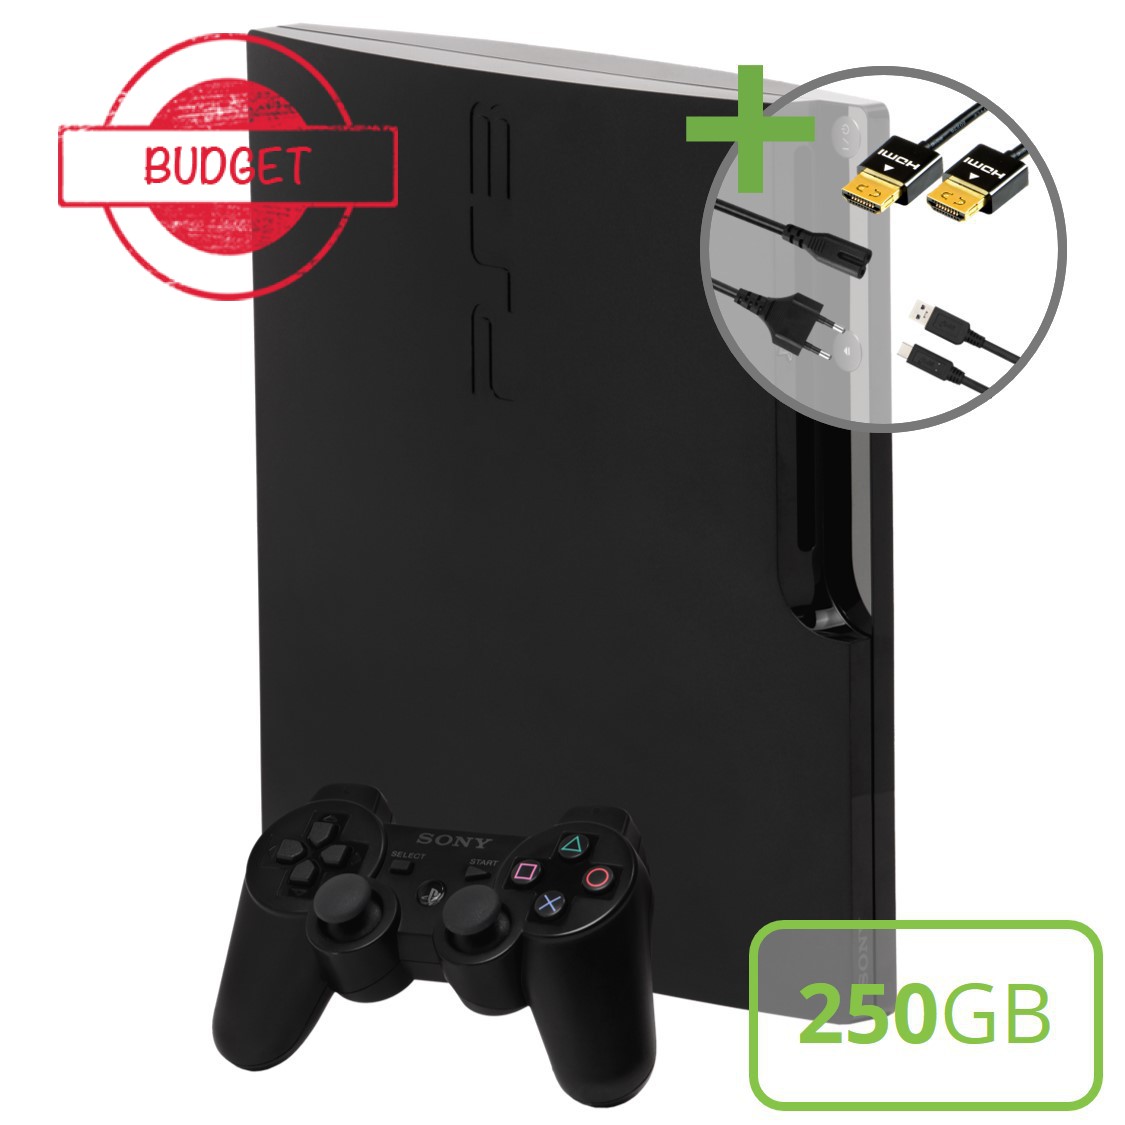 Sony PlayStation 3 Slim (250GB) Starter Pack - DualShock Edition - Budget - Playstation 3 Hardware - 2